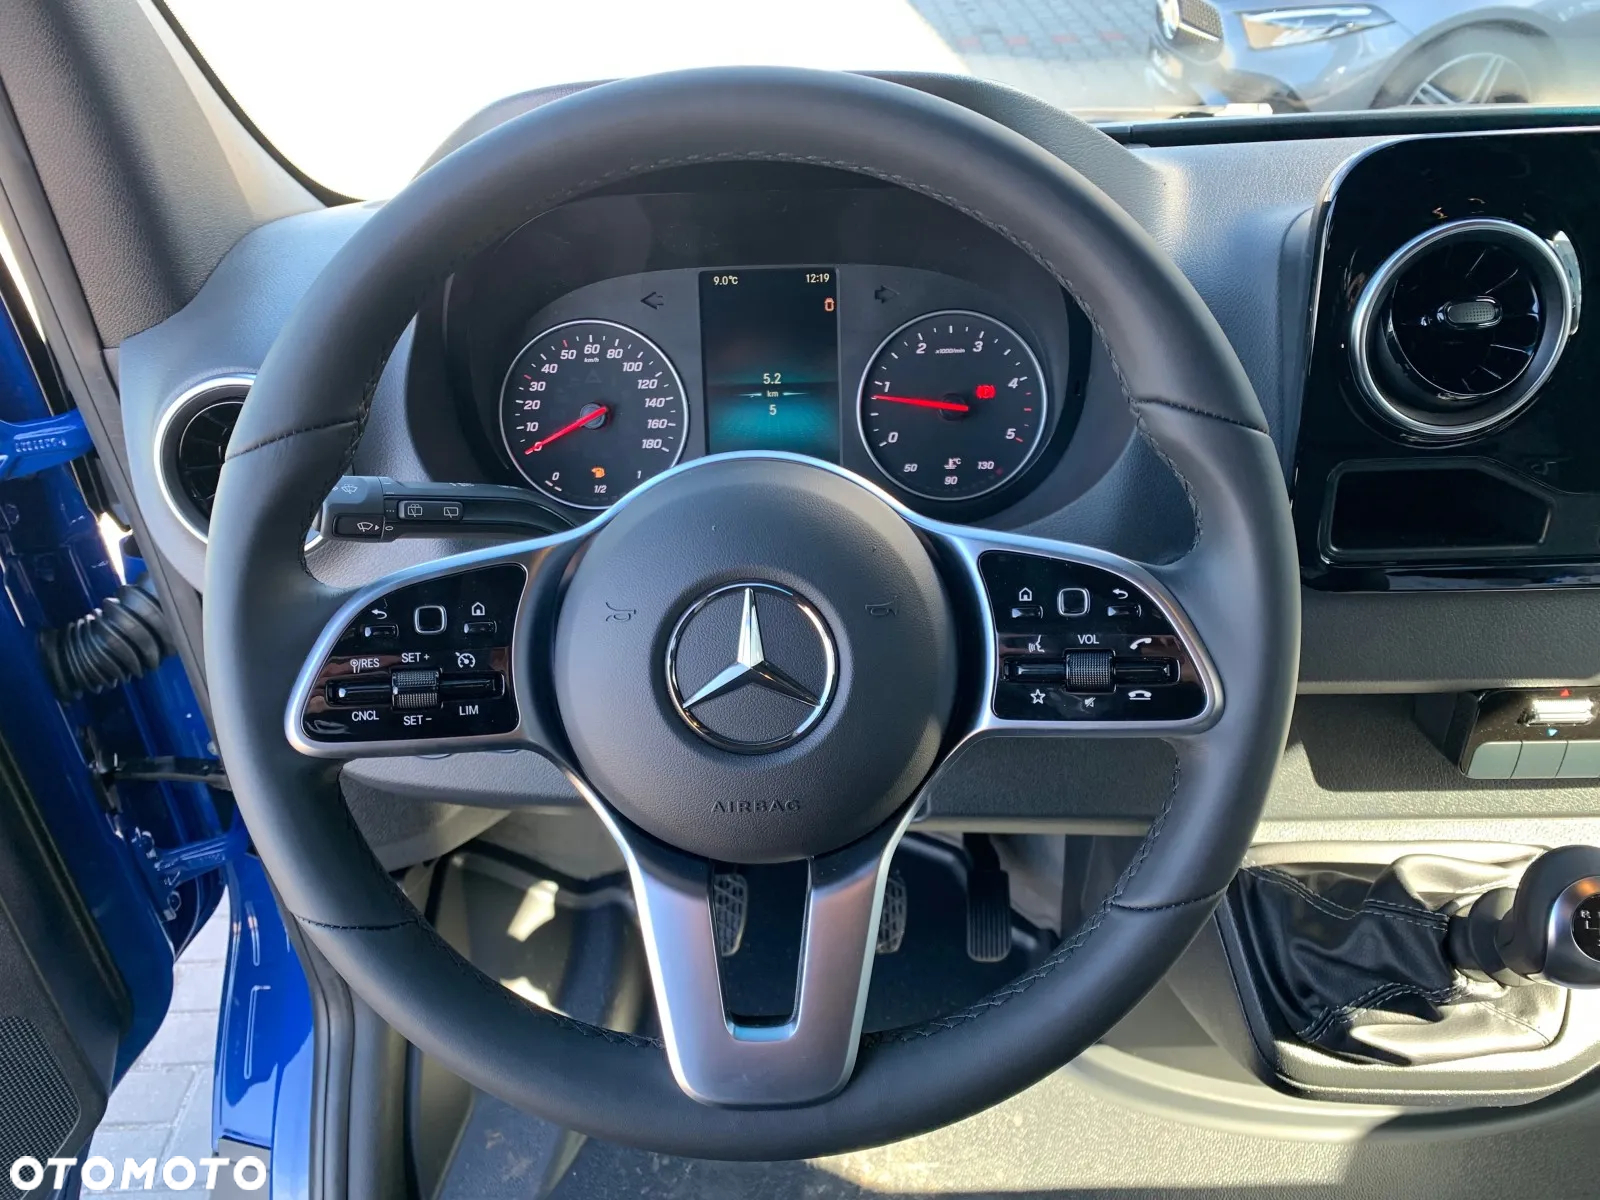 Mercedes-Benz Sprinter - 8